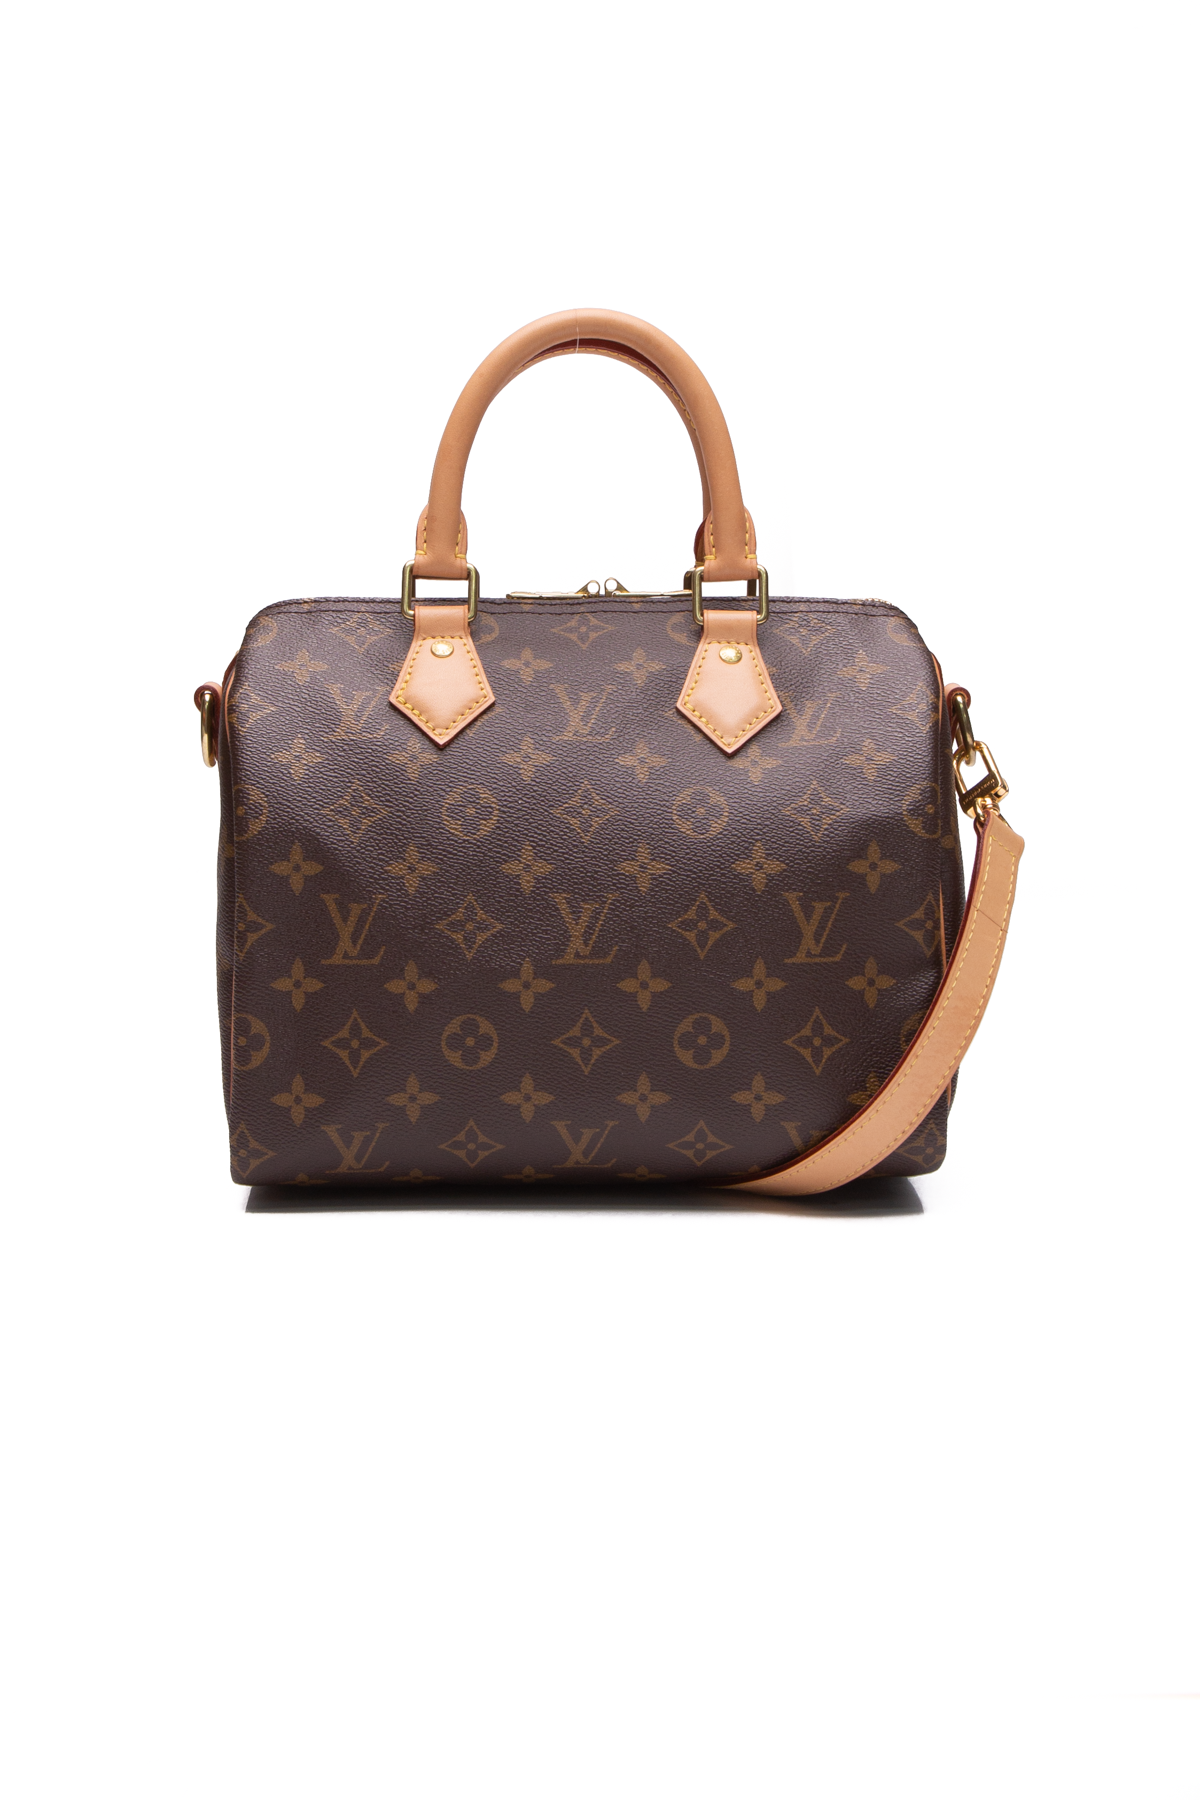 Louis Vuitton Pillow Speedy 25 Bandouliere Bag - Couture USA